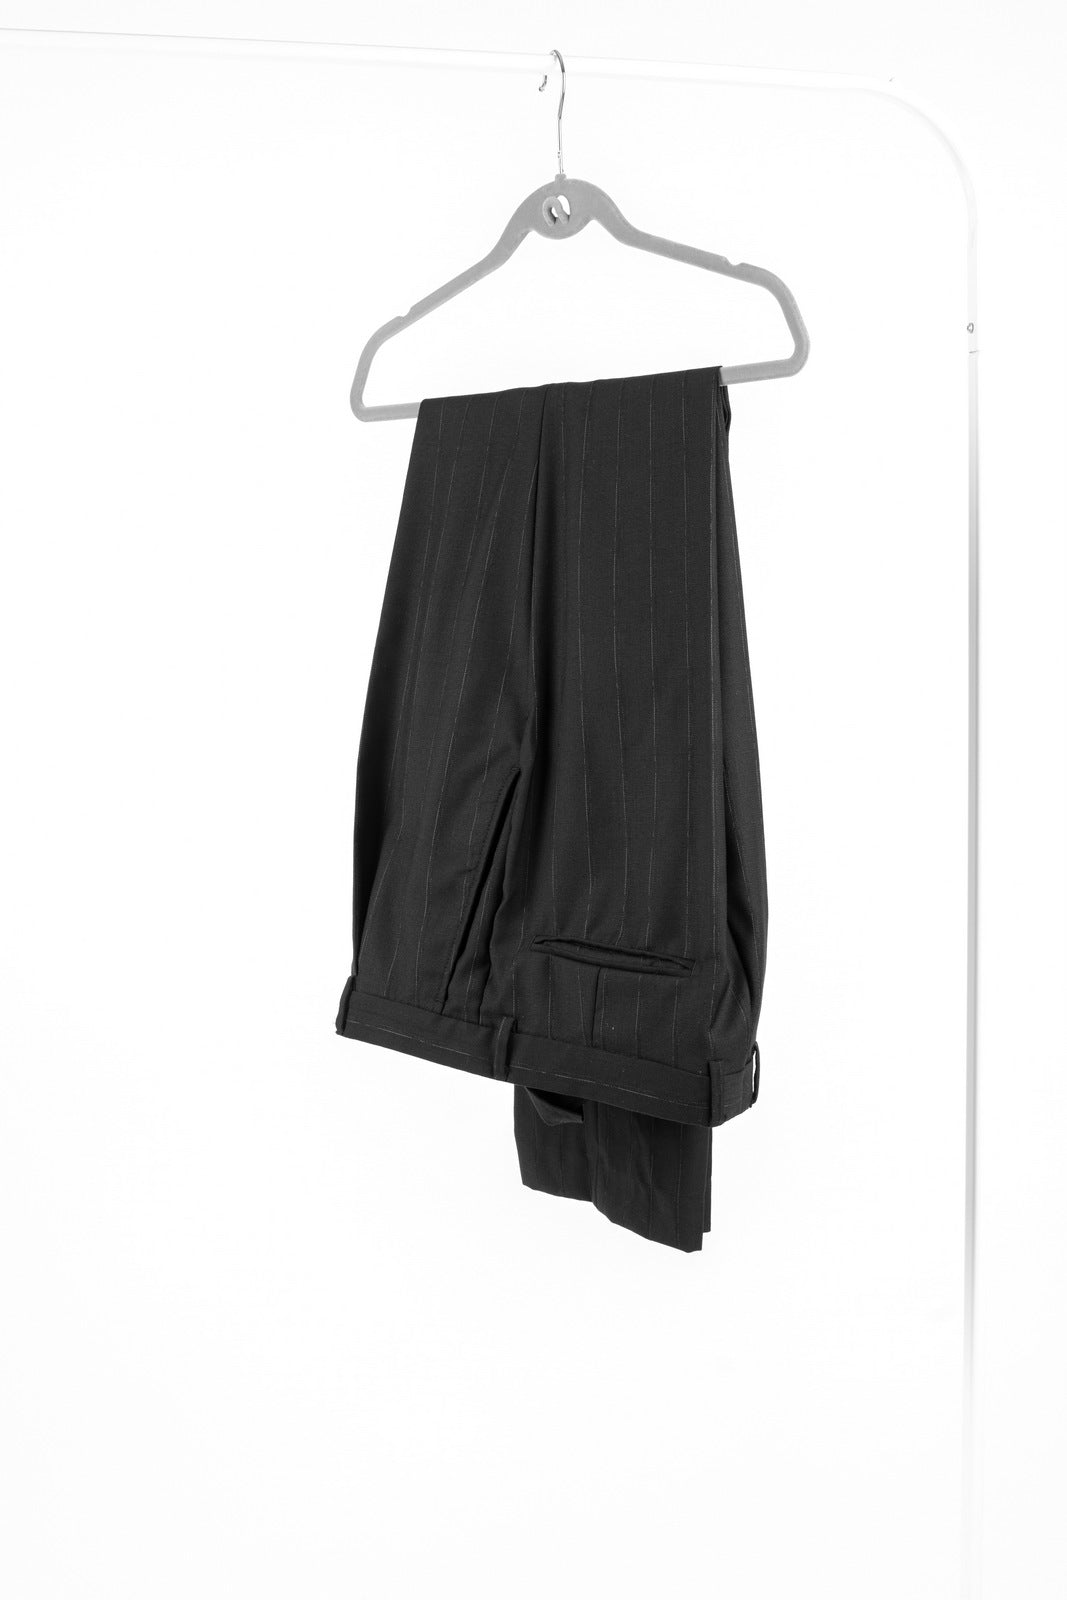 Men's Versace Black Wool Pleated Striped Trousers, EU 52R, US 32R